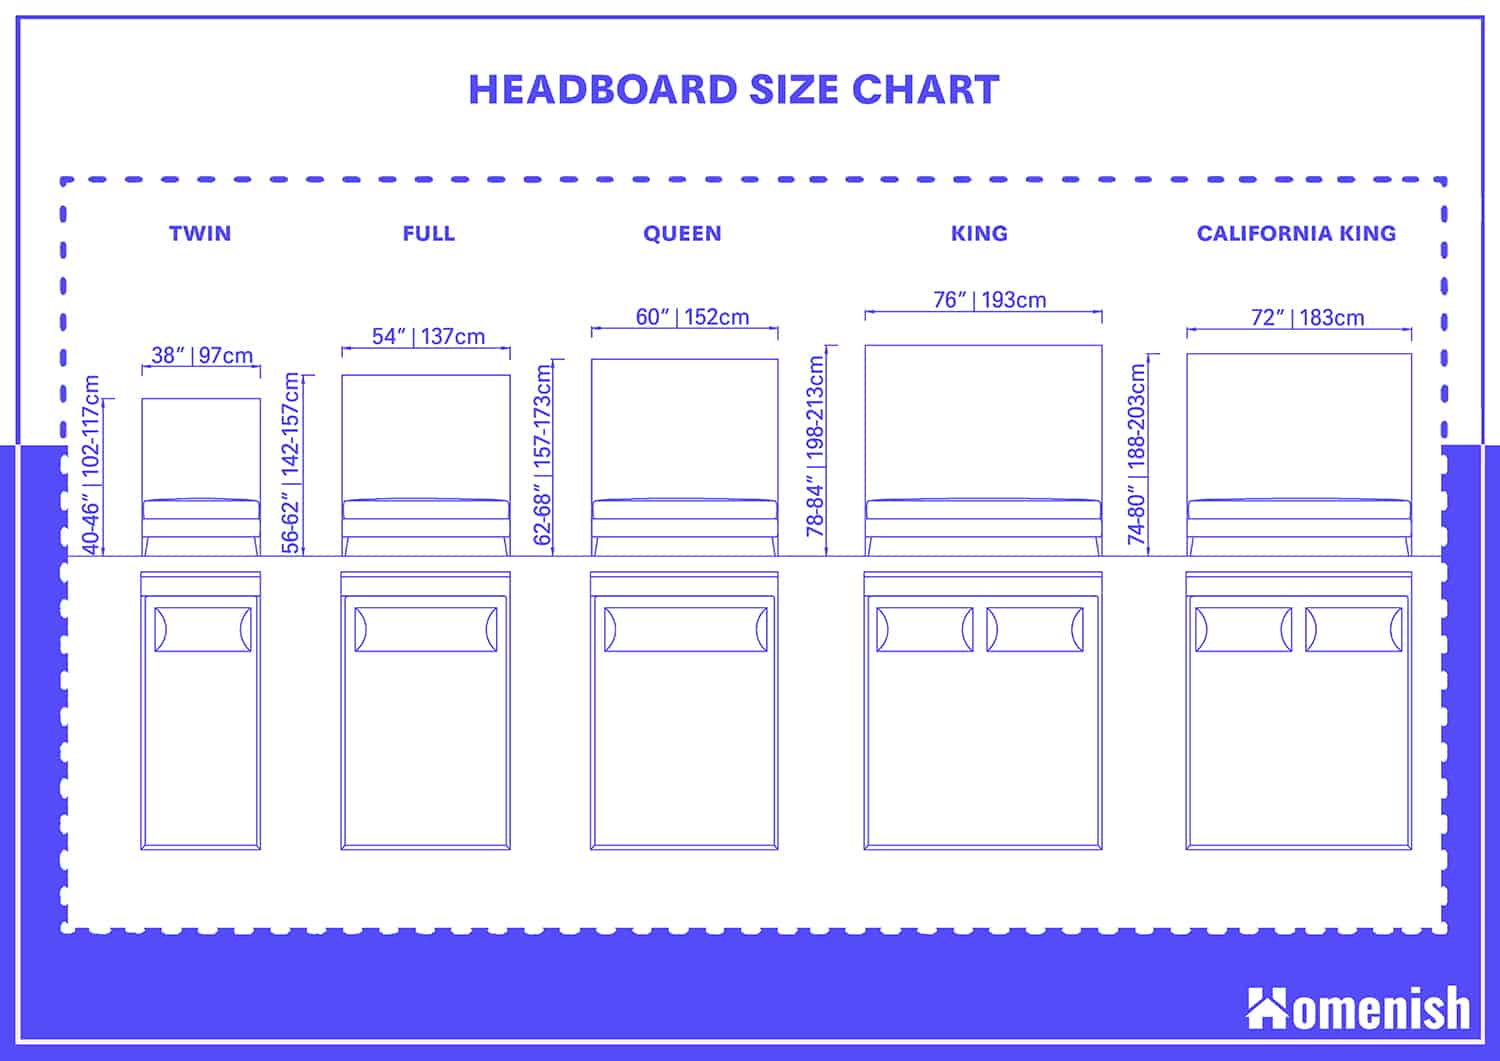 Standard Headboard Dimensions, Headboard Height For King Bed